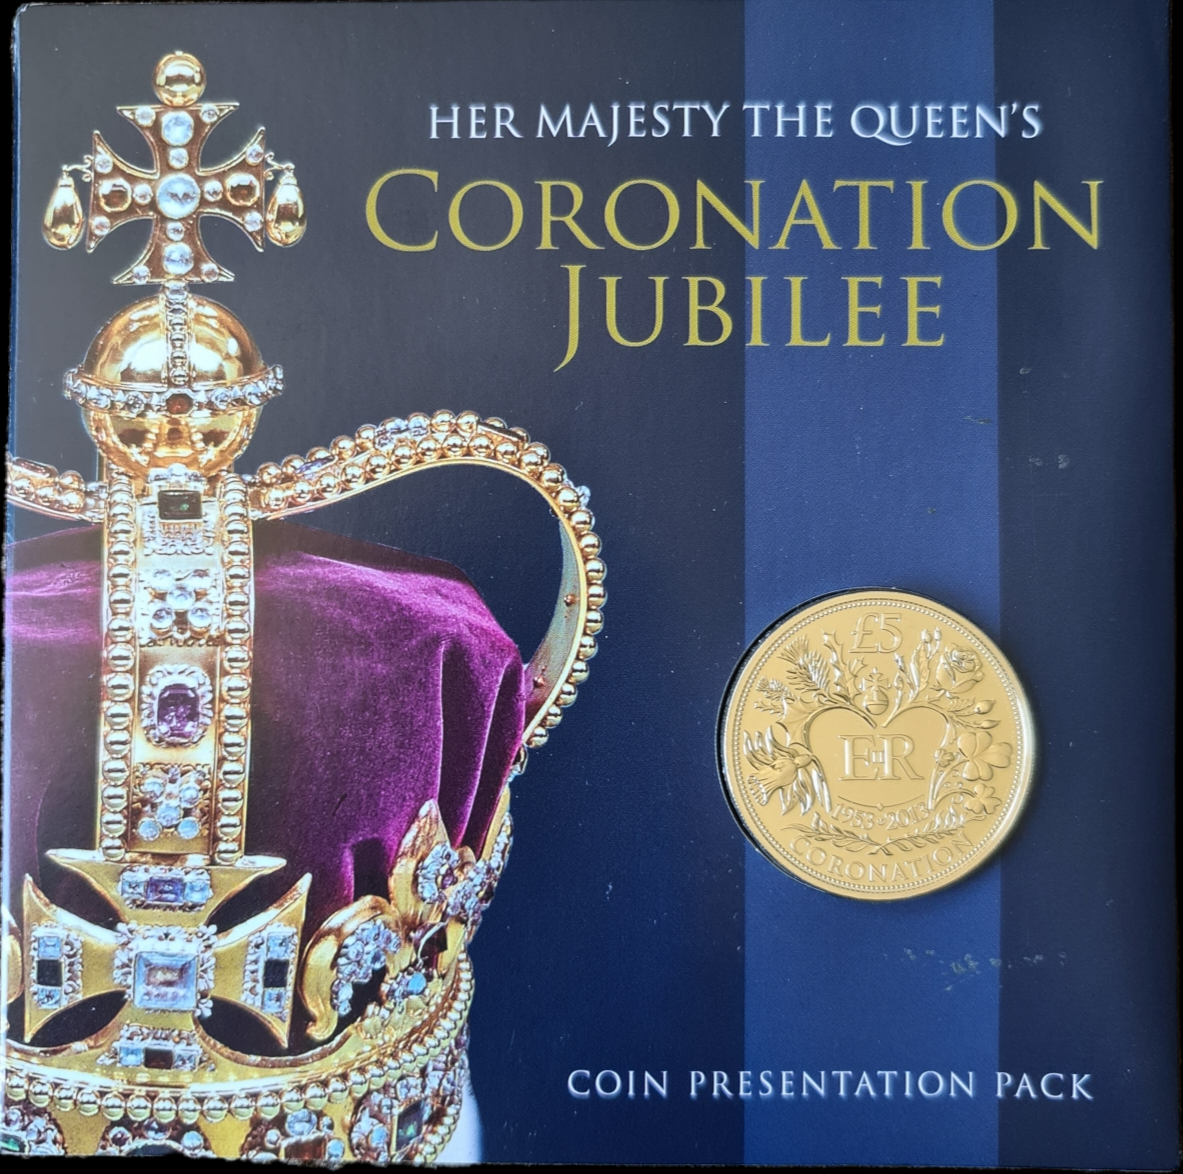 2013 Coronation Jubilee Presentation Pack